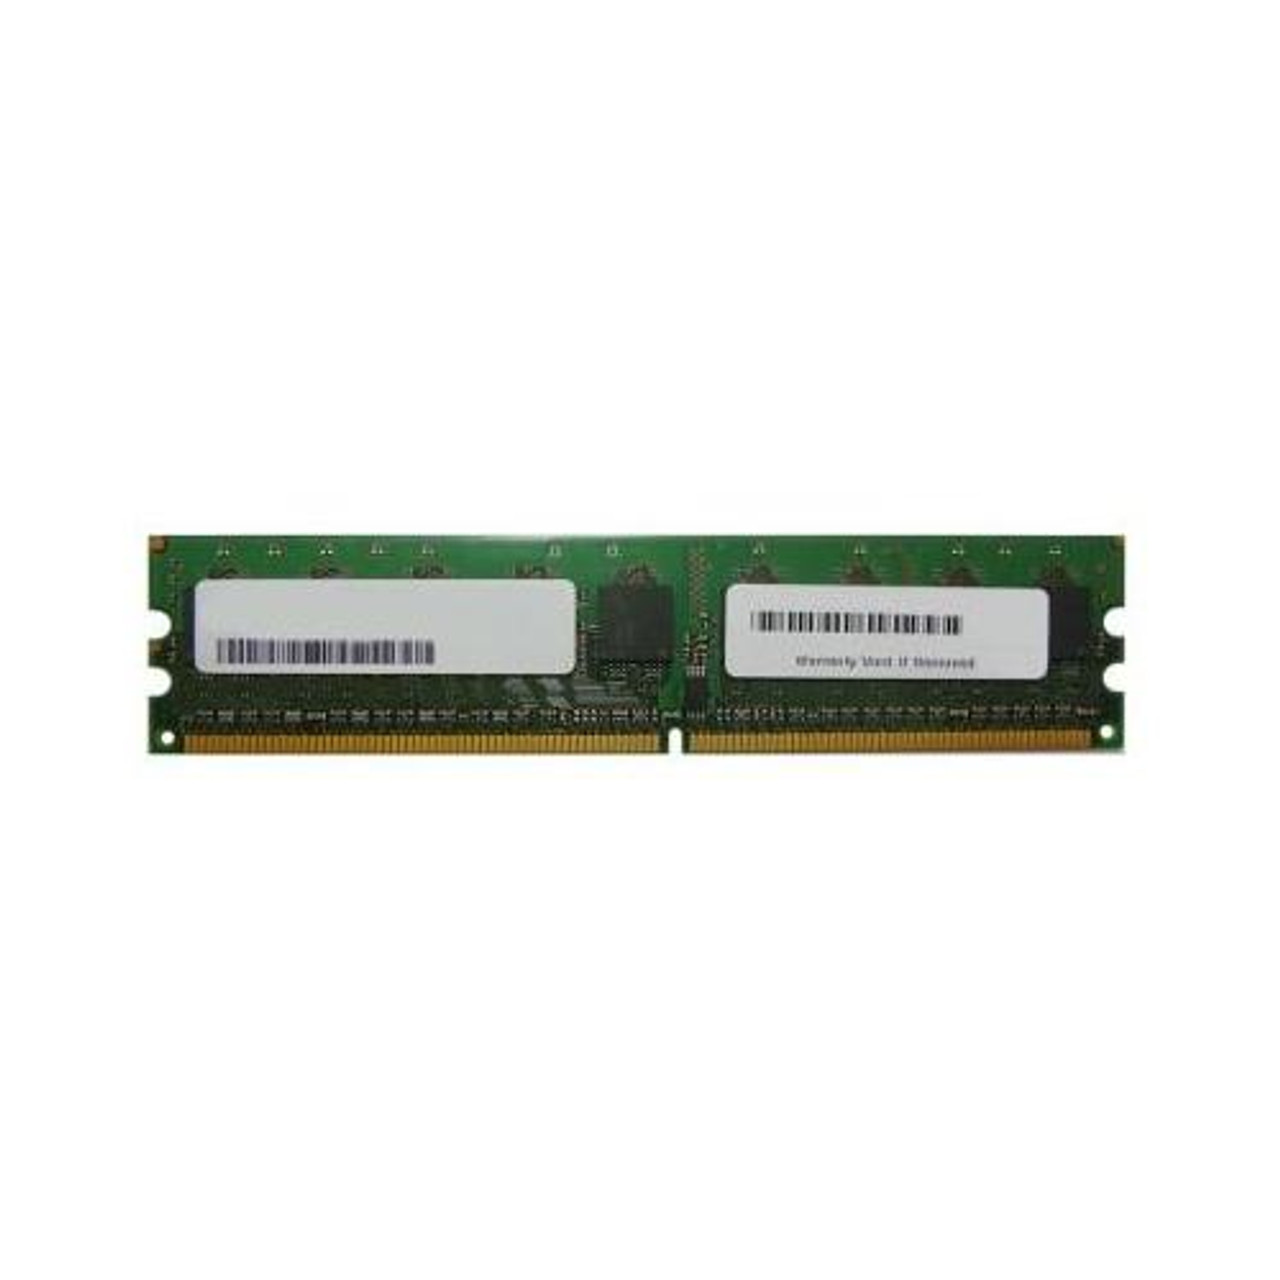 36M5790 IBM 2GB (2x1GB) DDR2 ECC PC2-5300 667Mhz